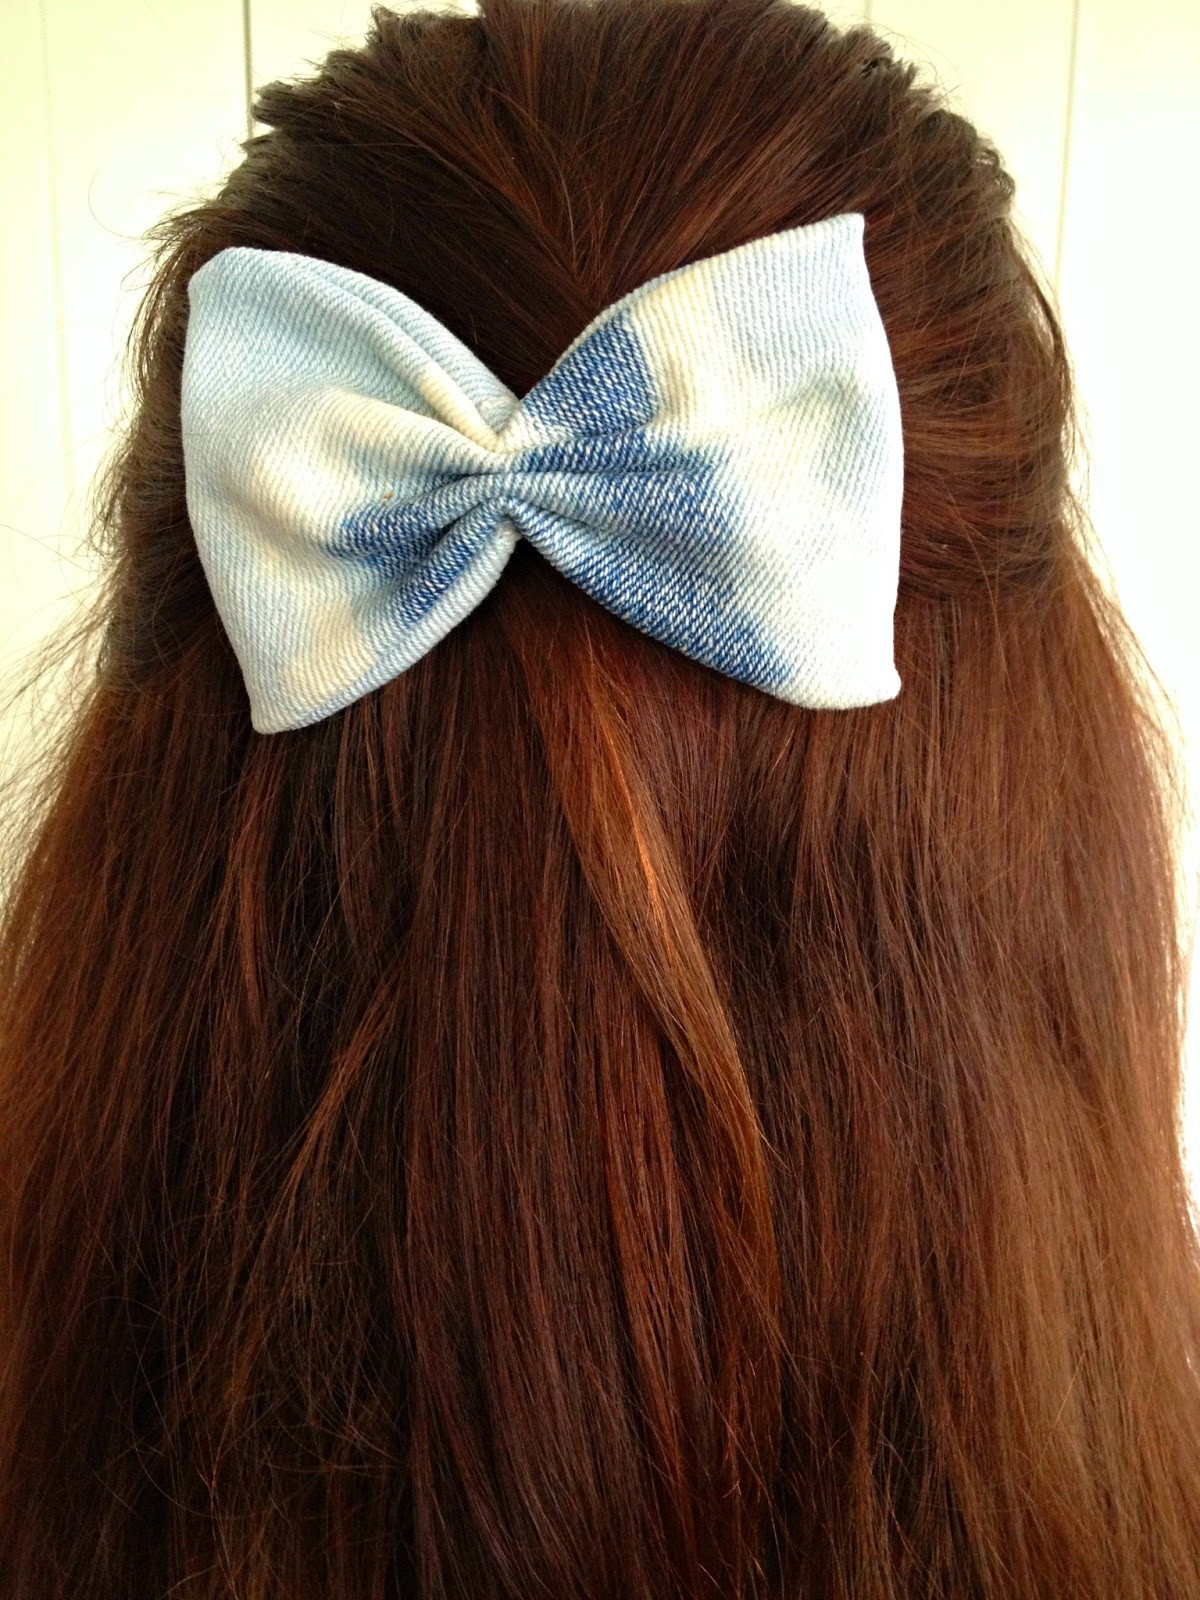 Best ideas about DIY Hair Bows
. Save or Pin Salute to Cute DIY Hair bows Denim scraps tutorial Now.